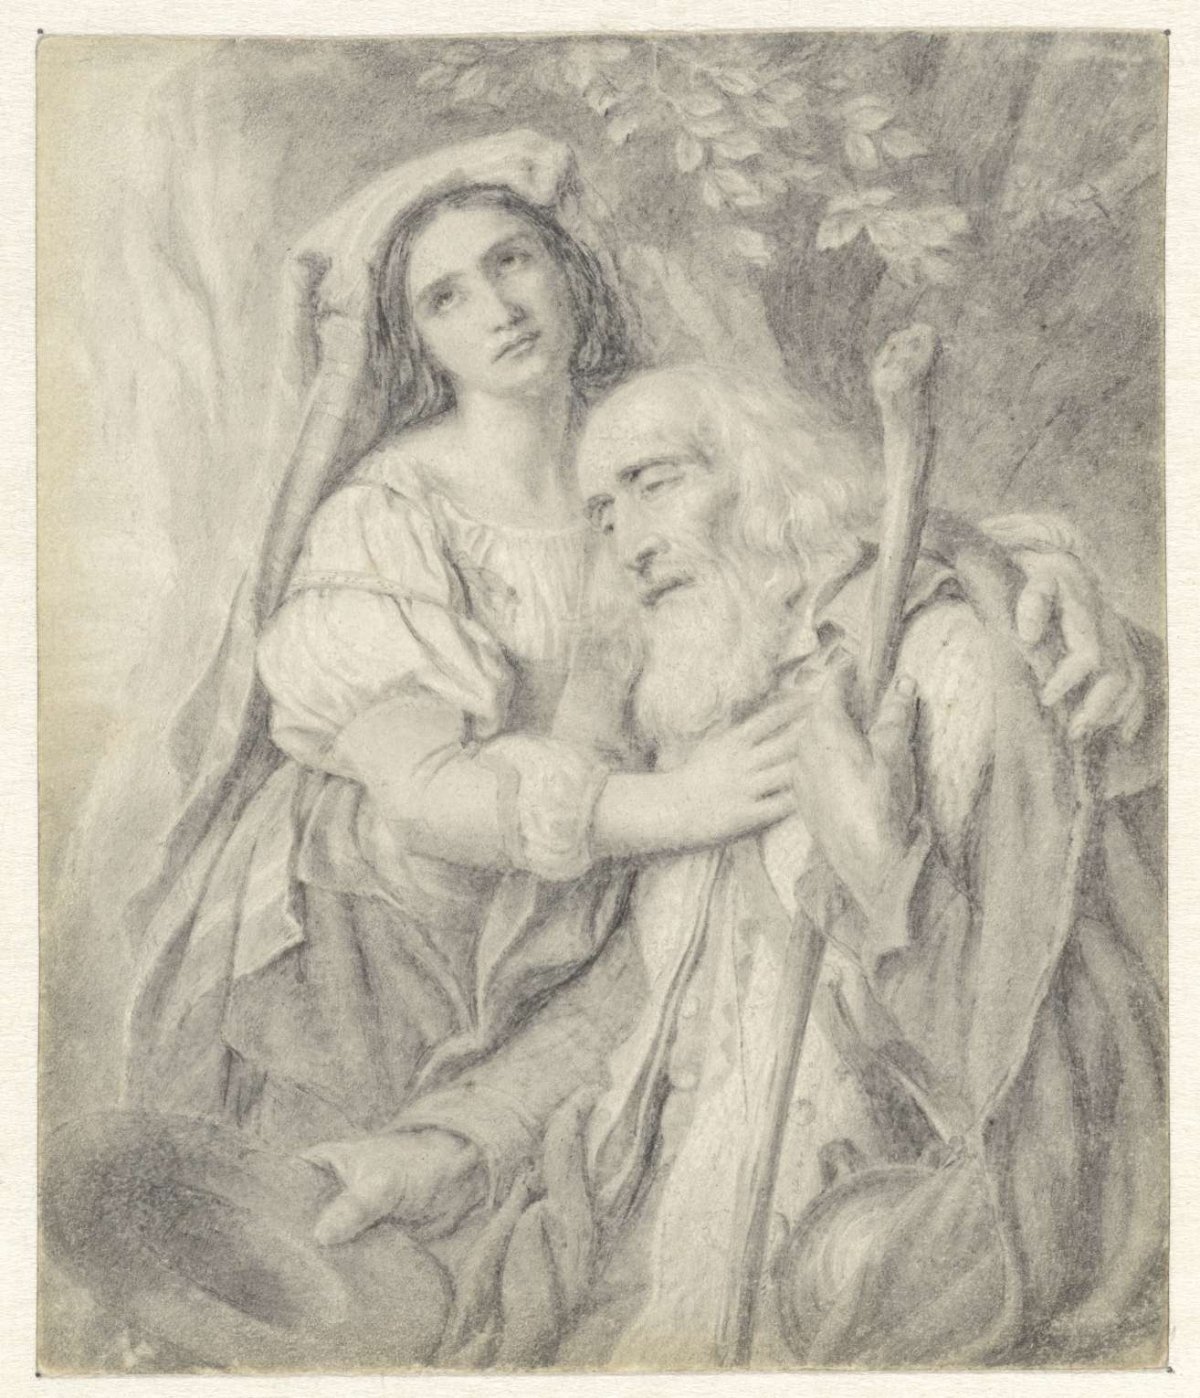 Old beggar with daughter, Matthijs Maris, 1849 - 1917